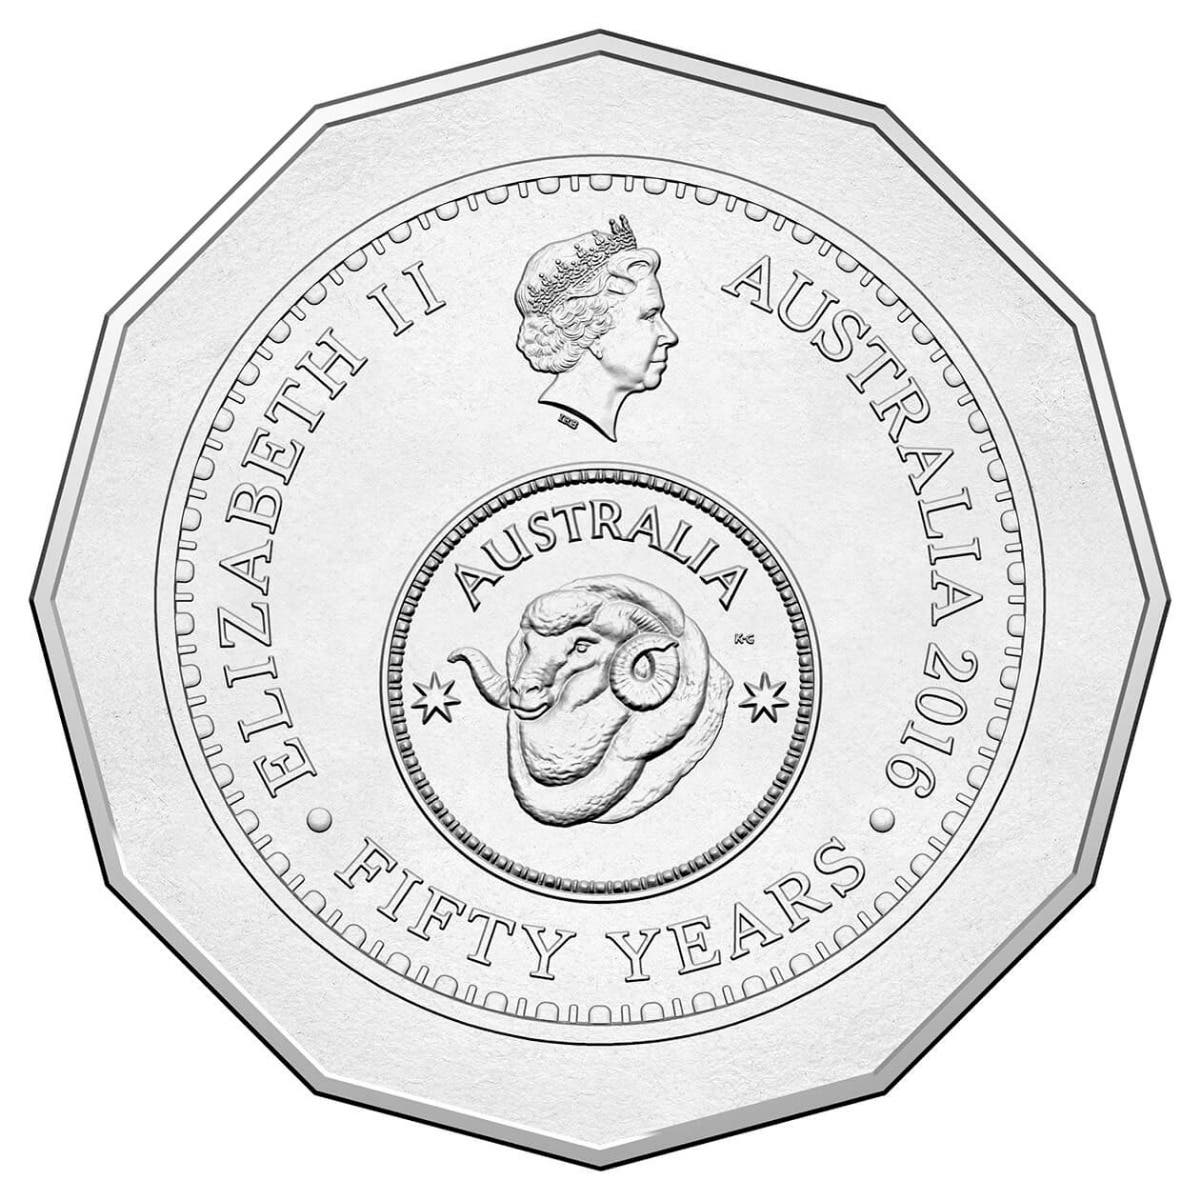 Decimal Currency 50th Anniversary 2016 50c Cu-Ni Coin Pack